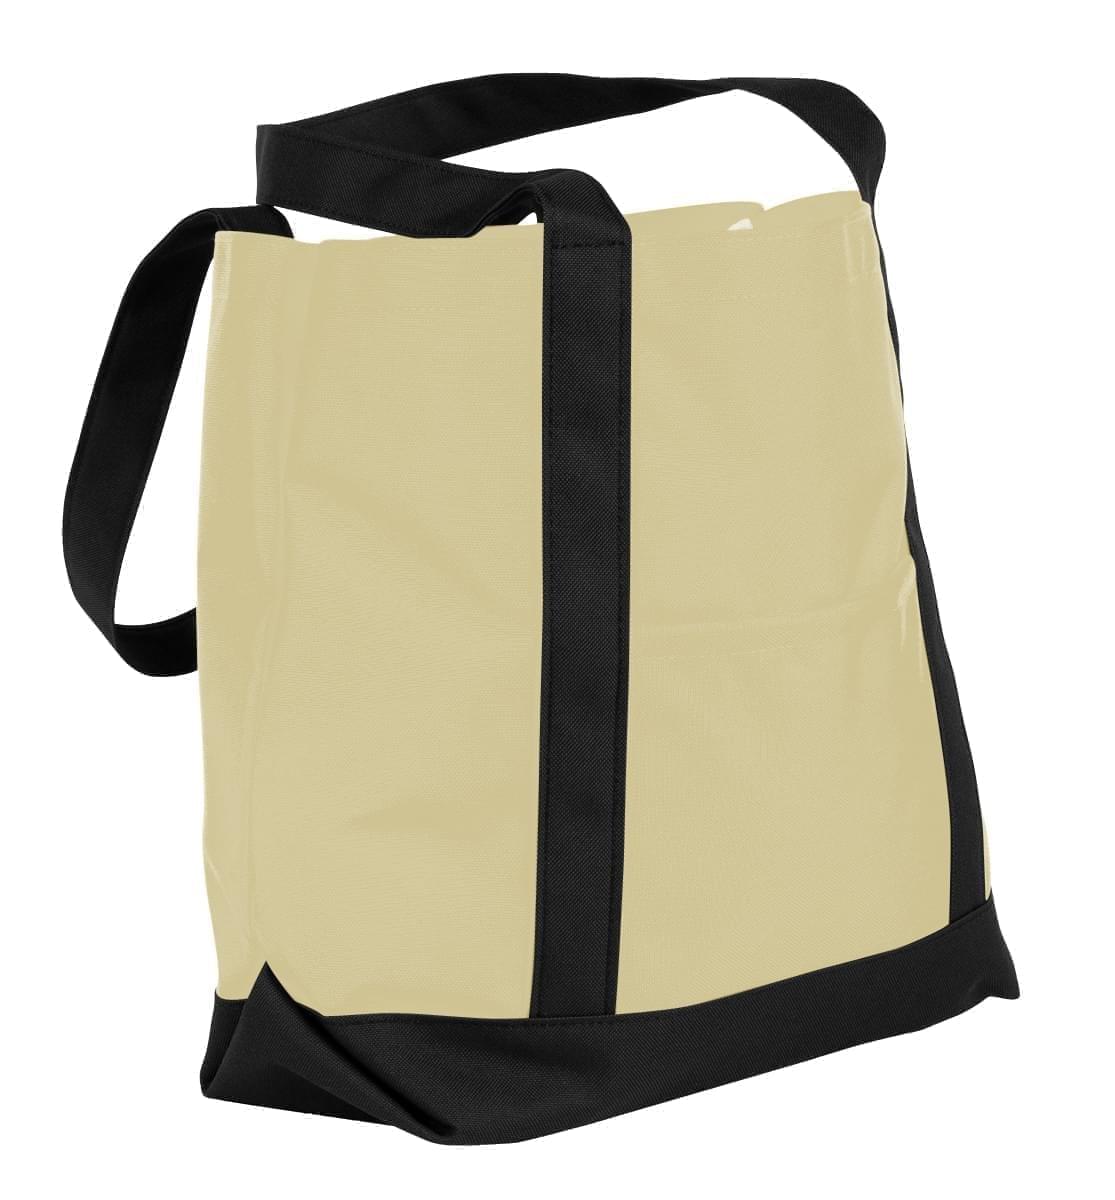 USA Made Canvas Fashion Tote Bags, Natural-Black, XAACL1UAKC